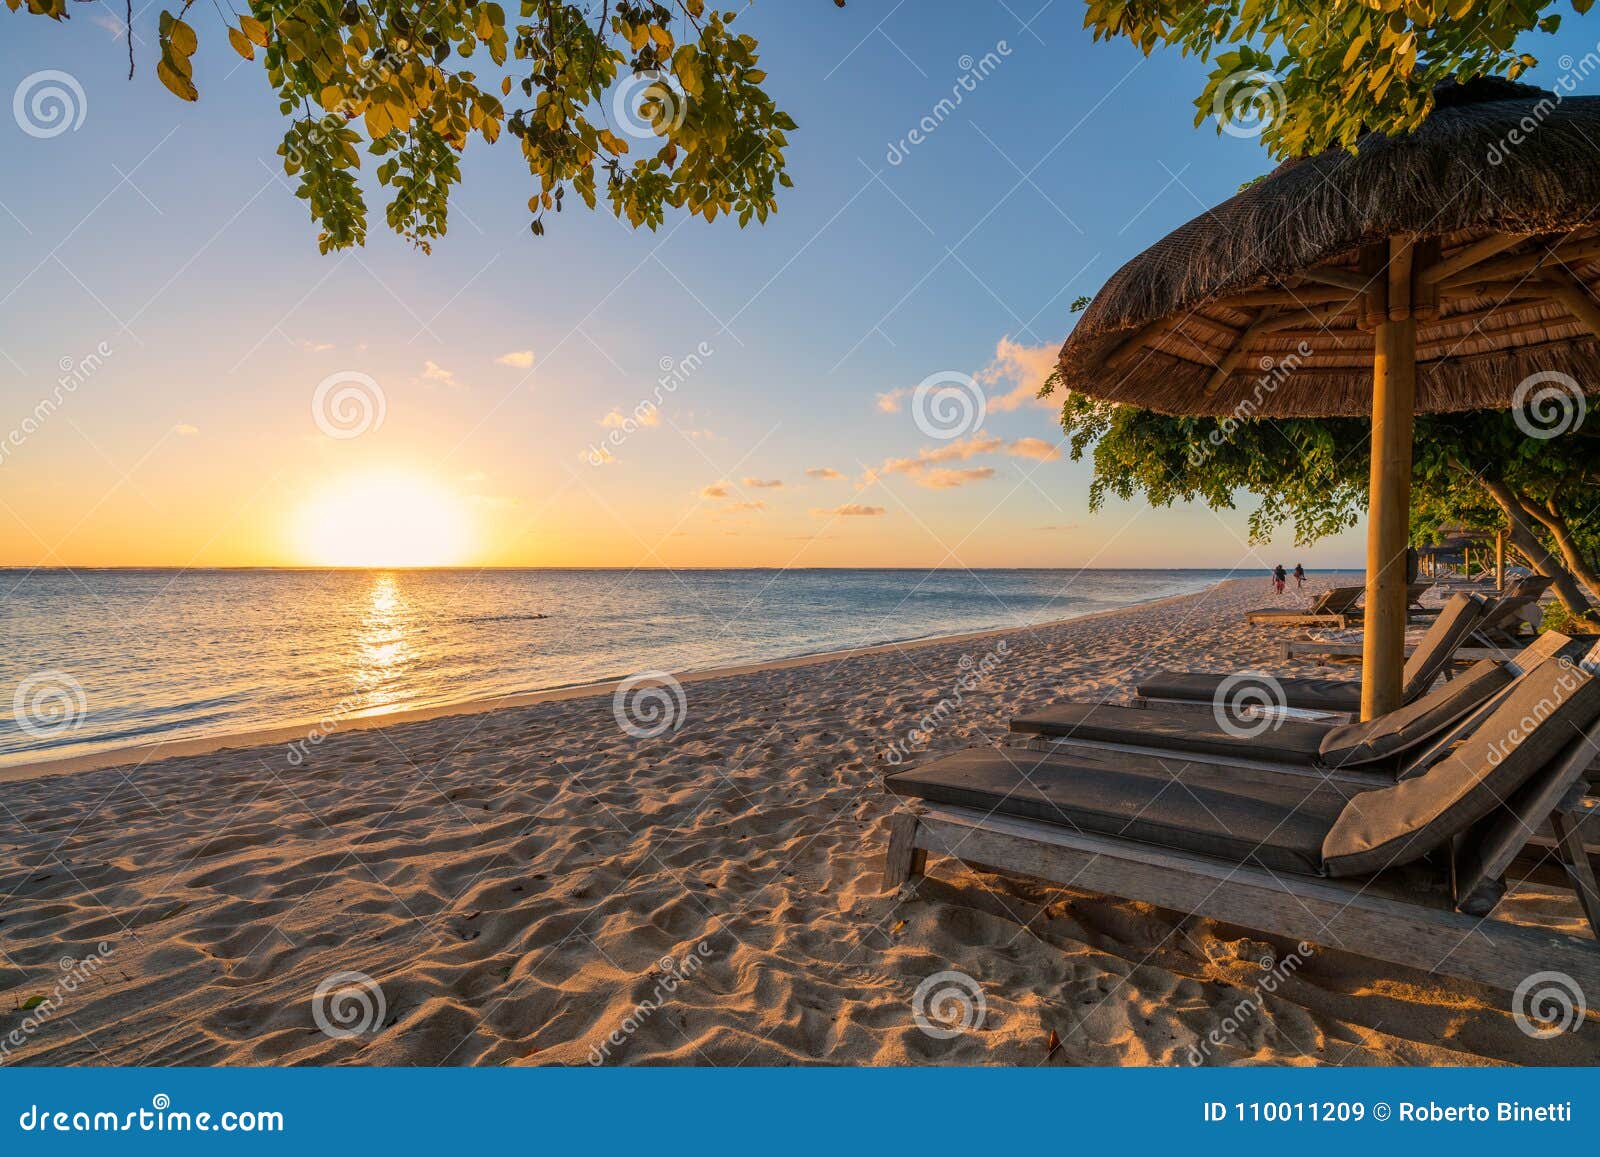 Beautiful Beach At Sunset Stock Image Image Of Landscape